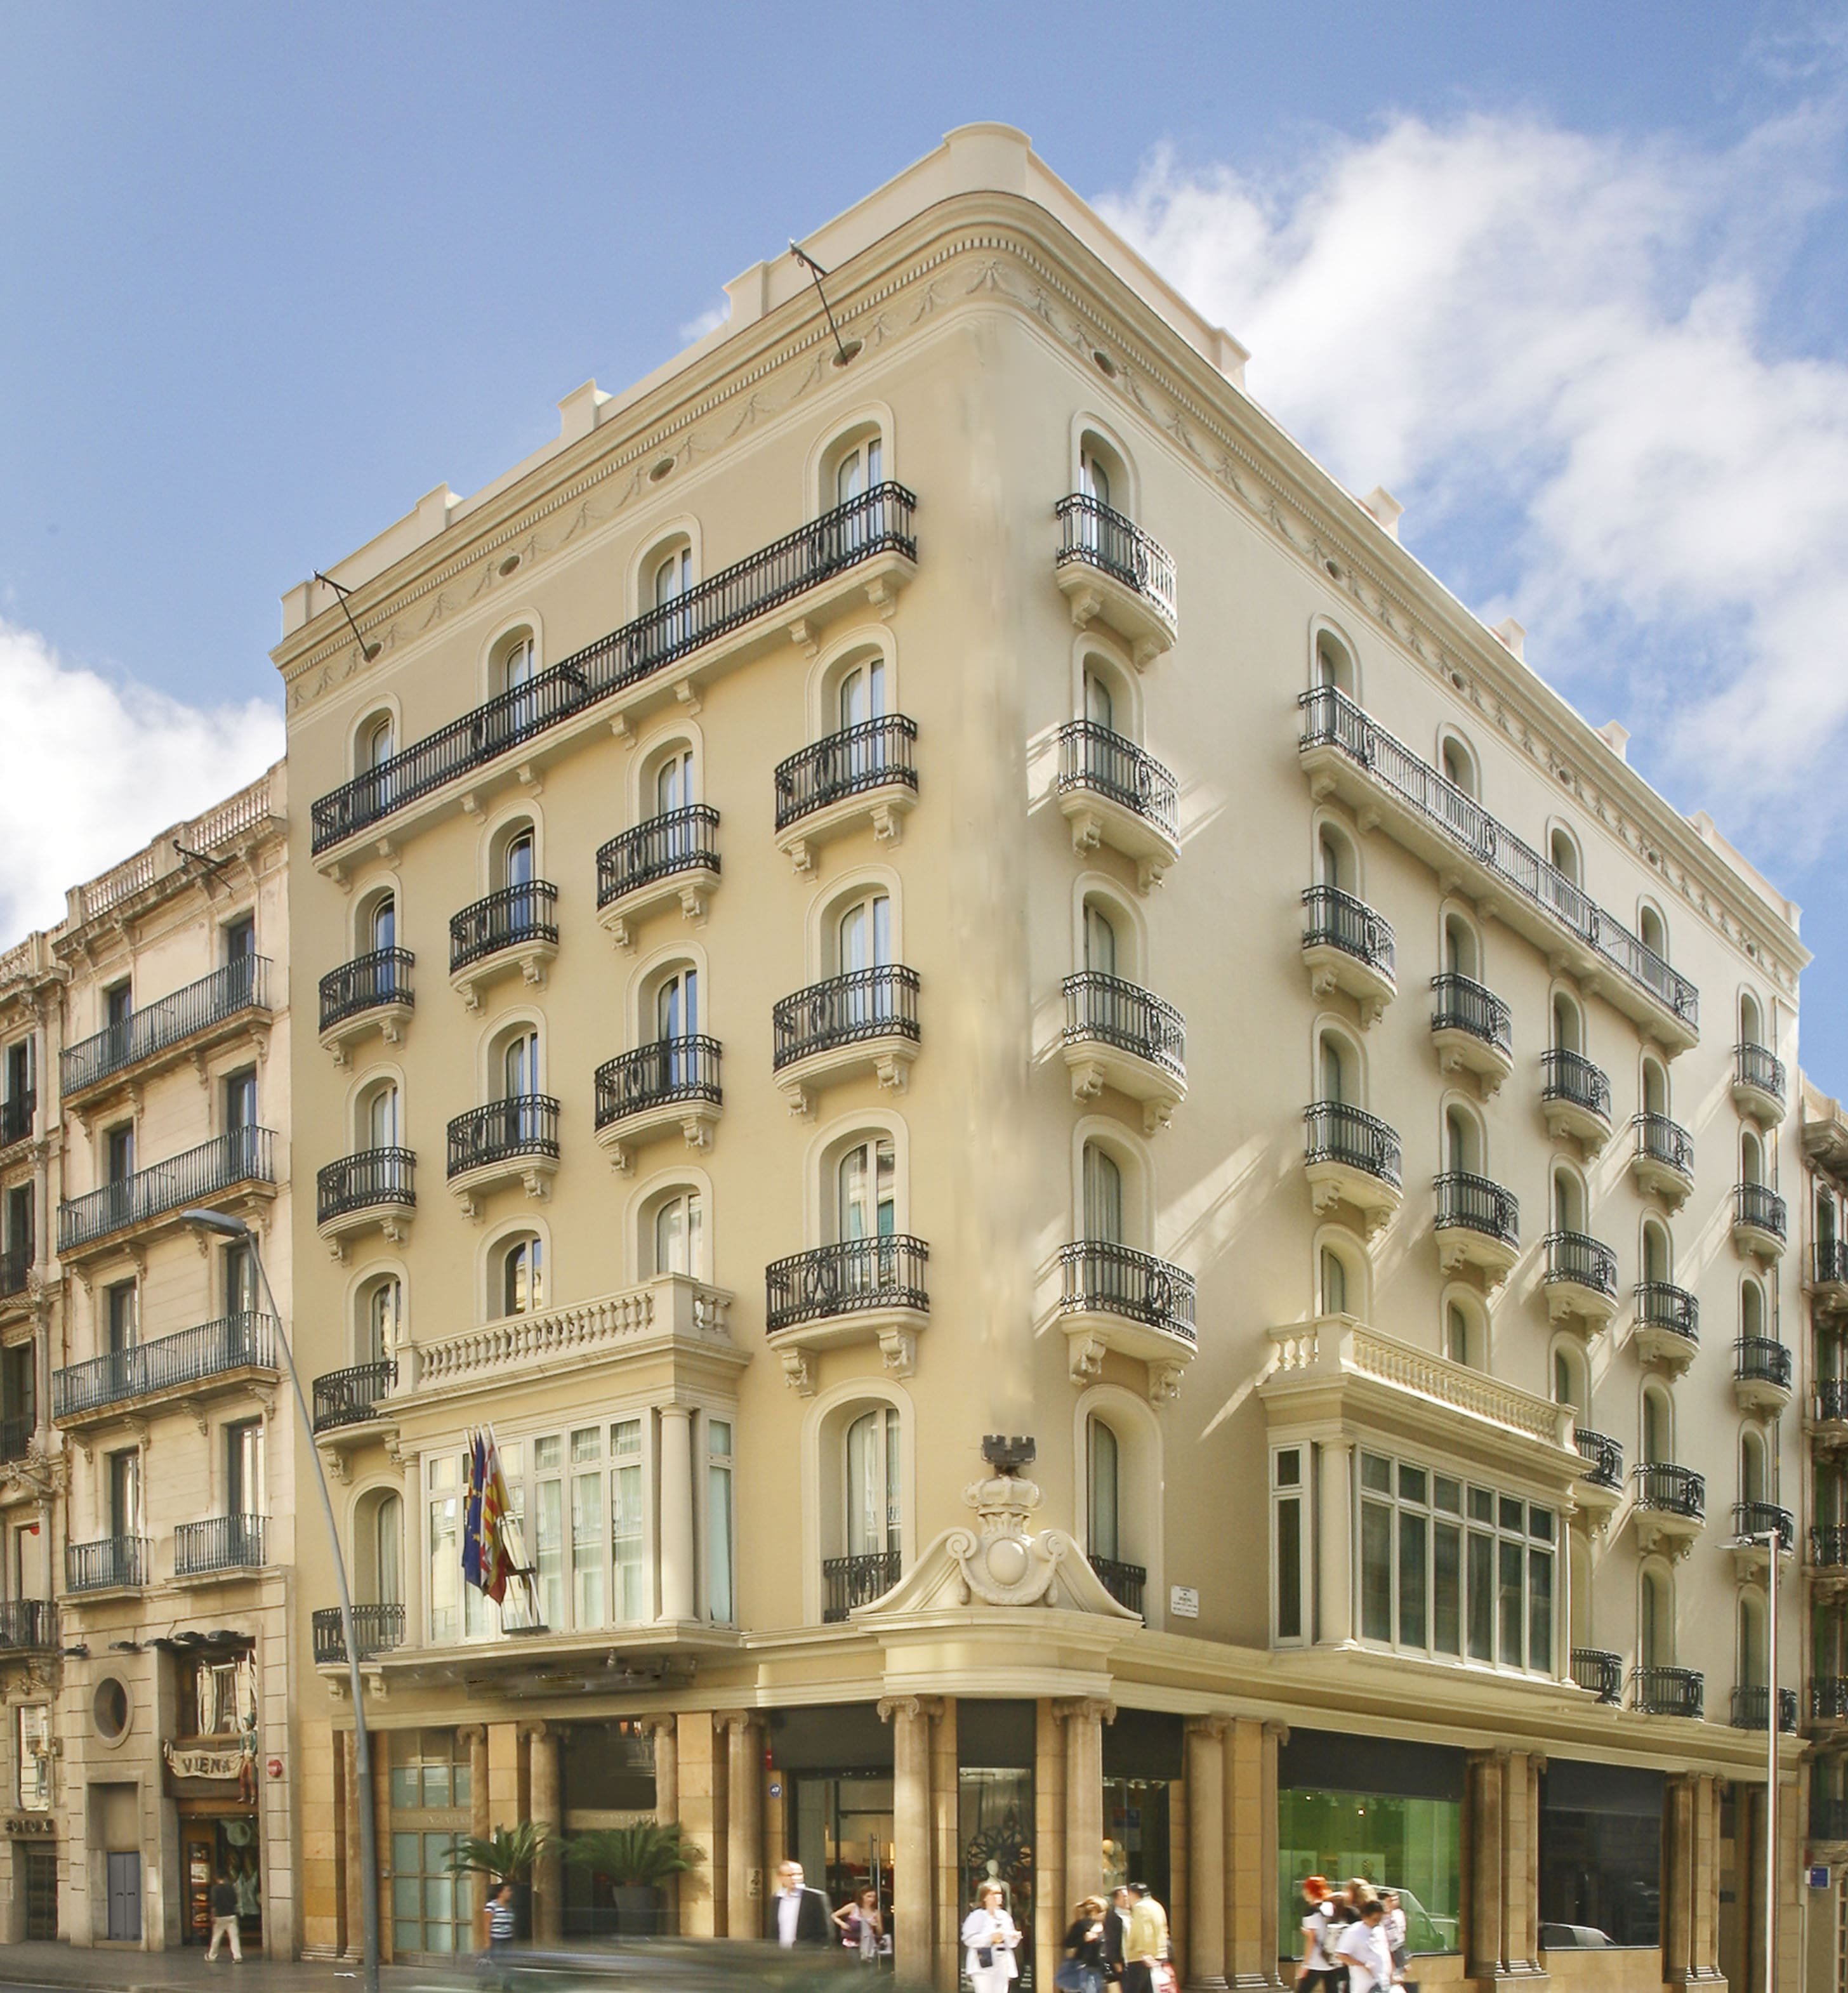 222/Midmost_Barcelona/Fachada_Hotel_MidMost.jpg